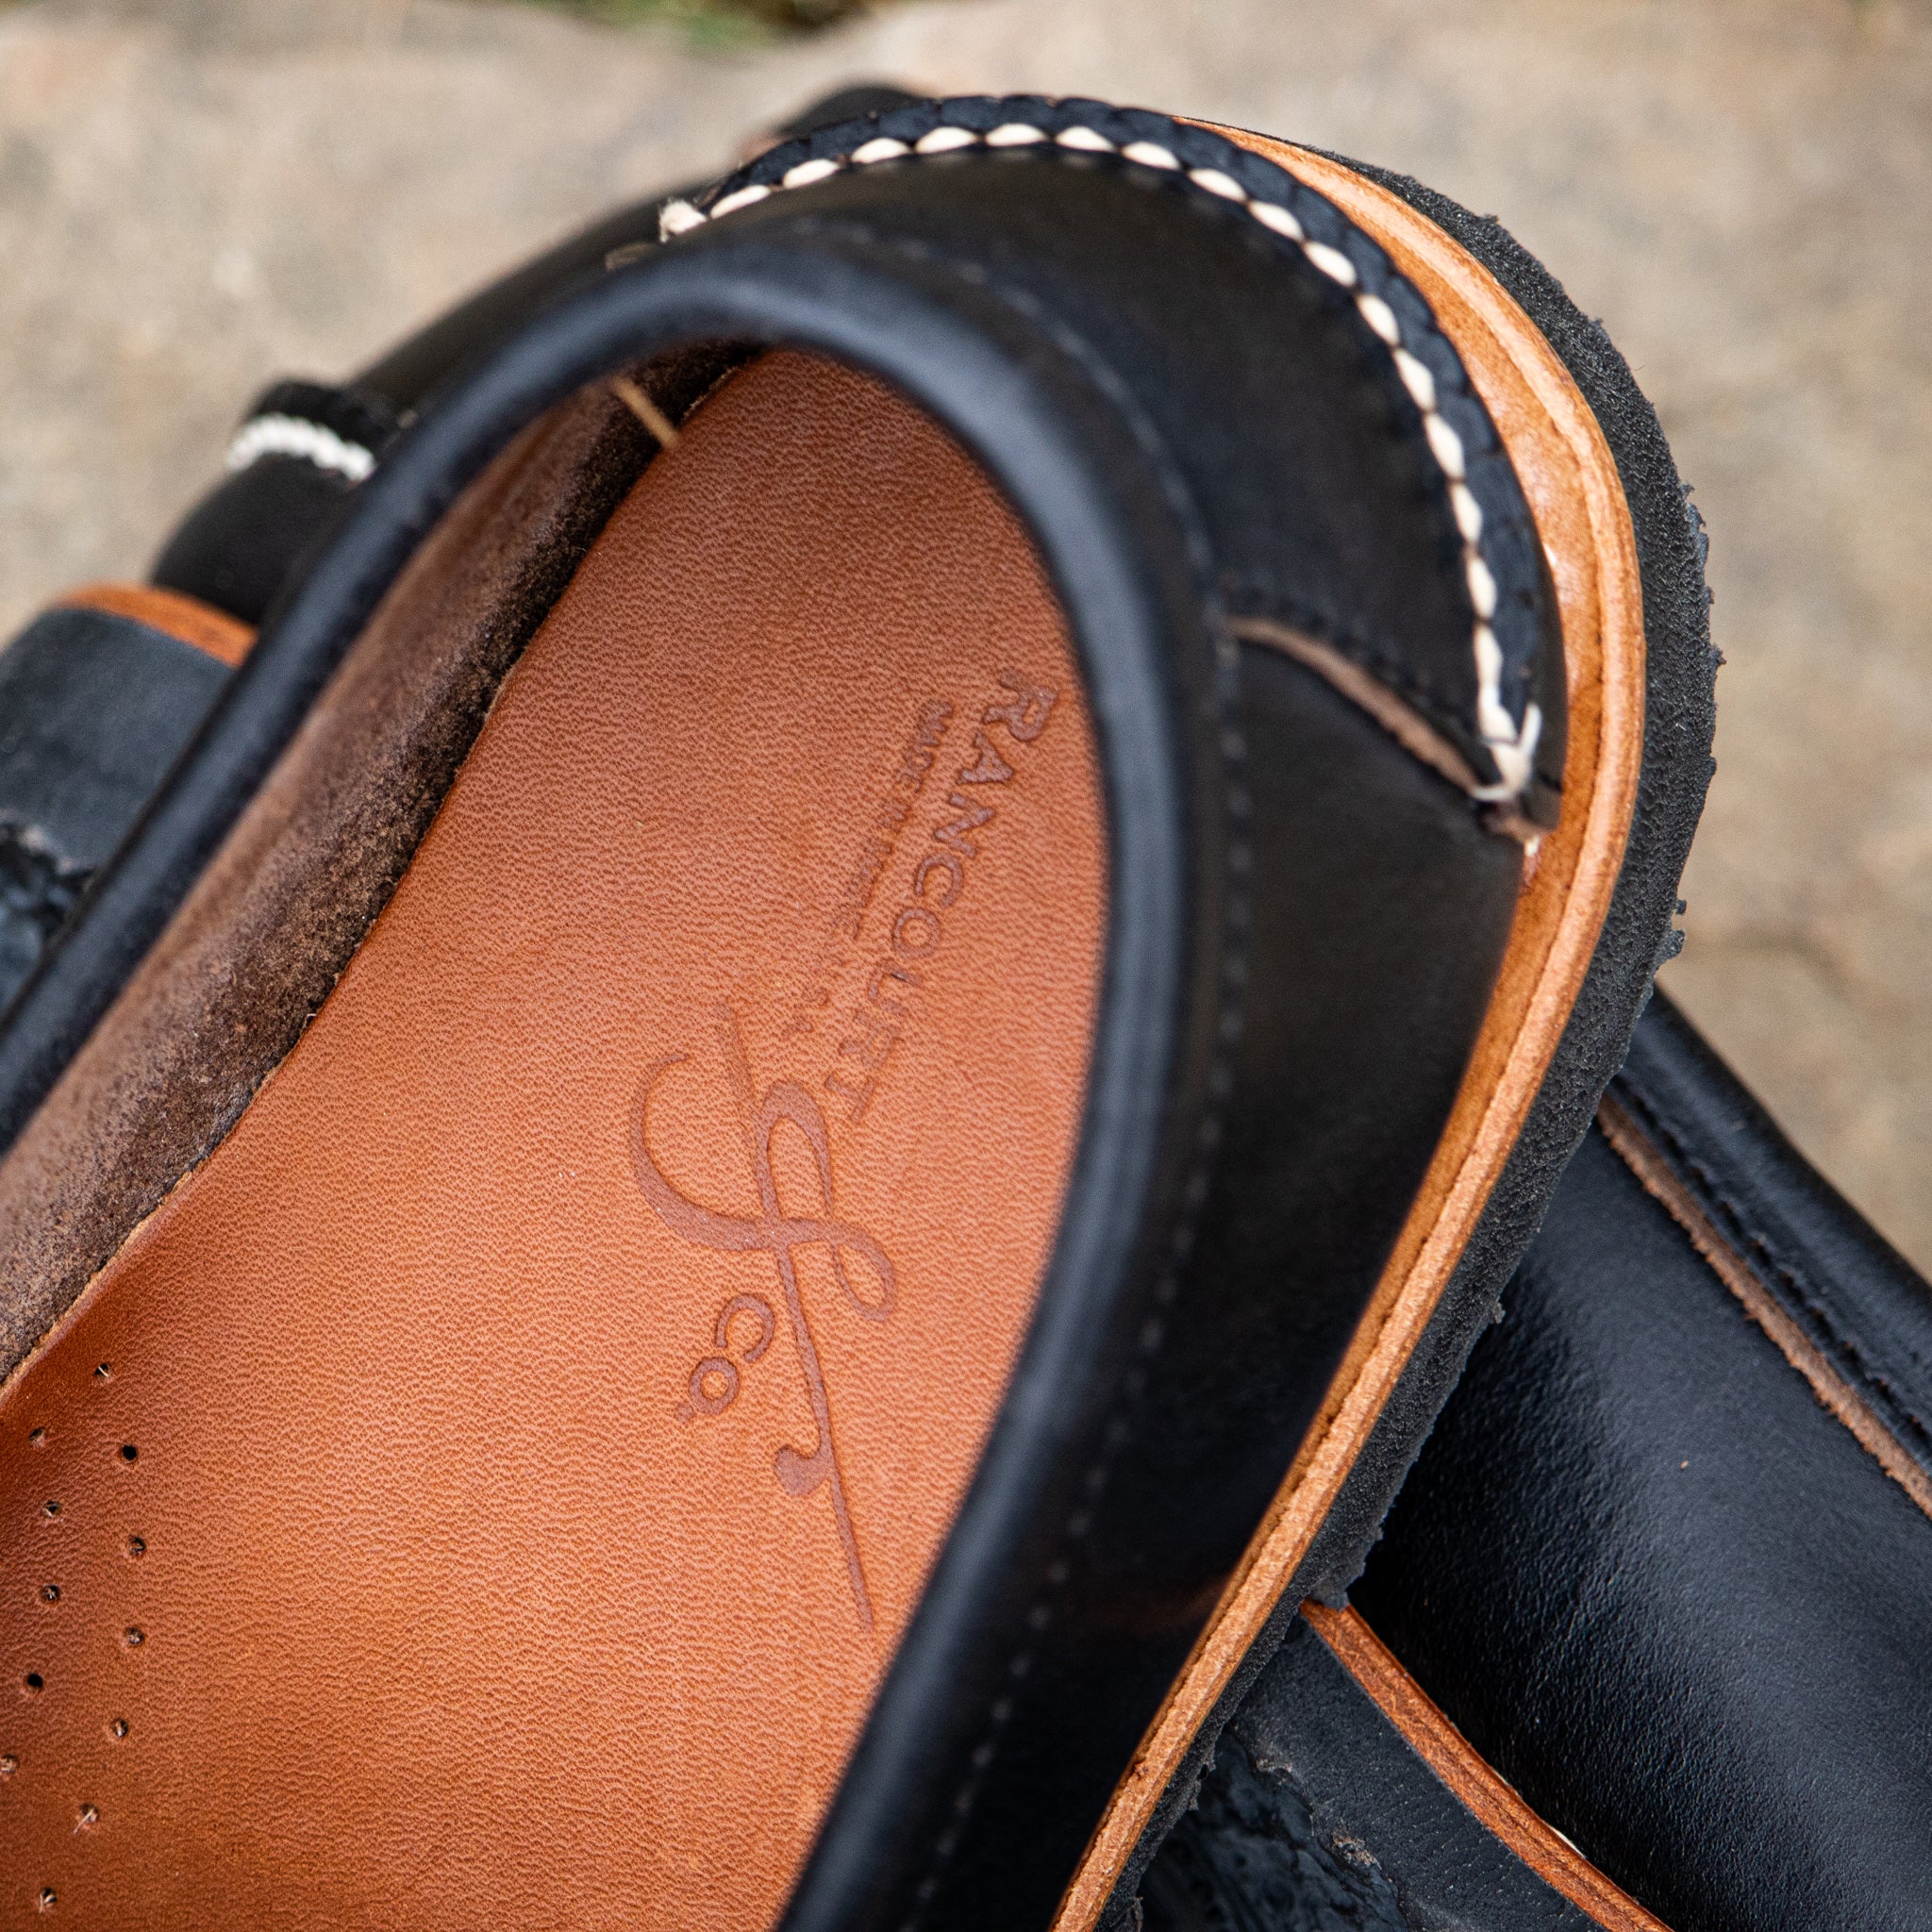 Horsebit Loafers = Black Calf, Rancourt & Co.